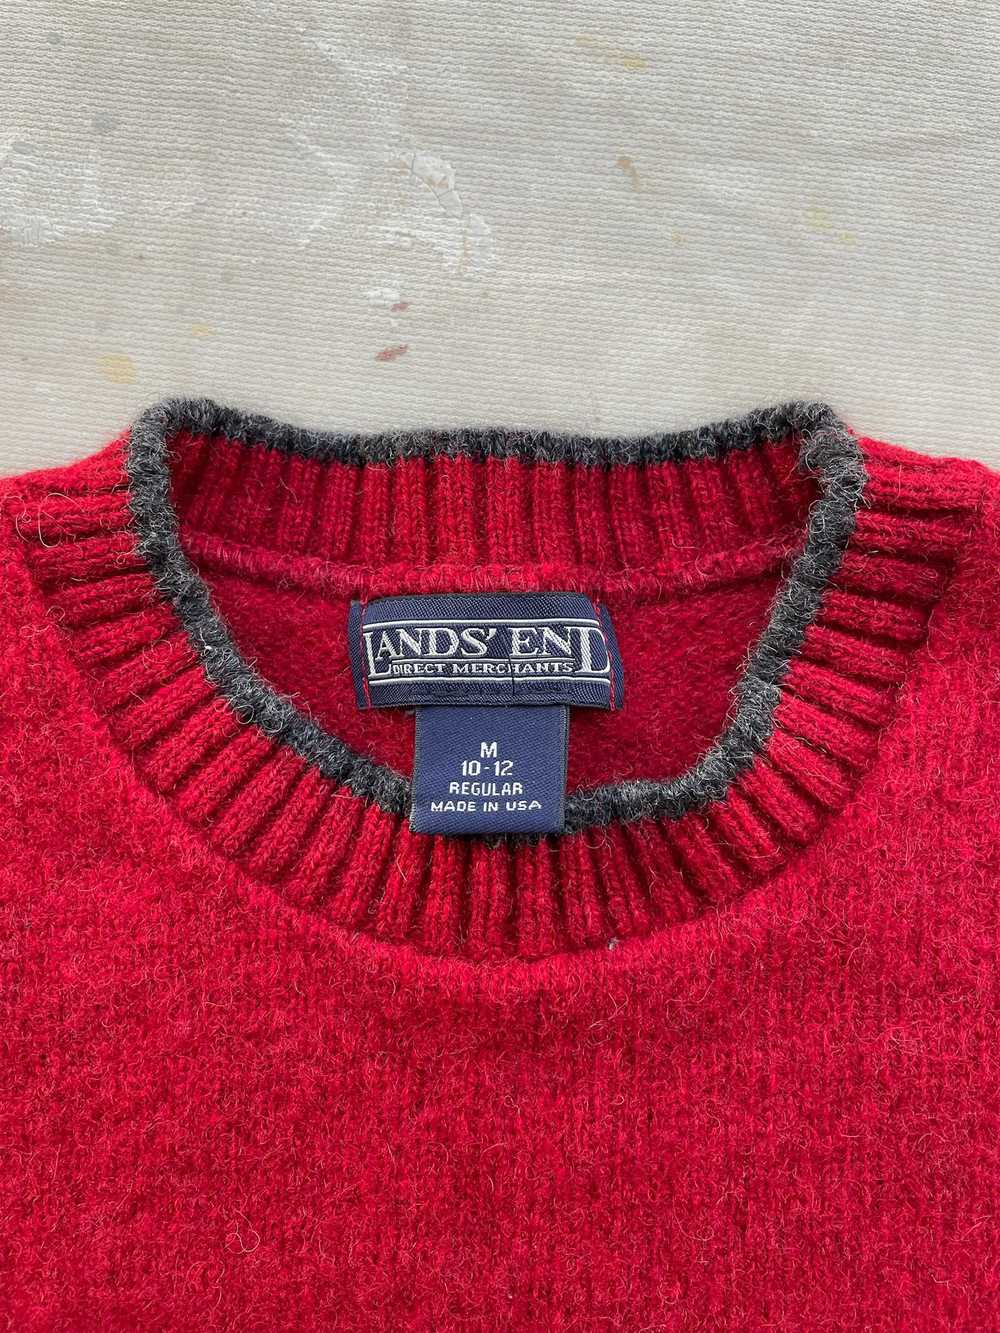 80's Lands' End Wool Knit Crewneck Sweater—[S/M] - image 4